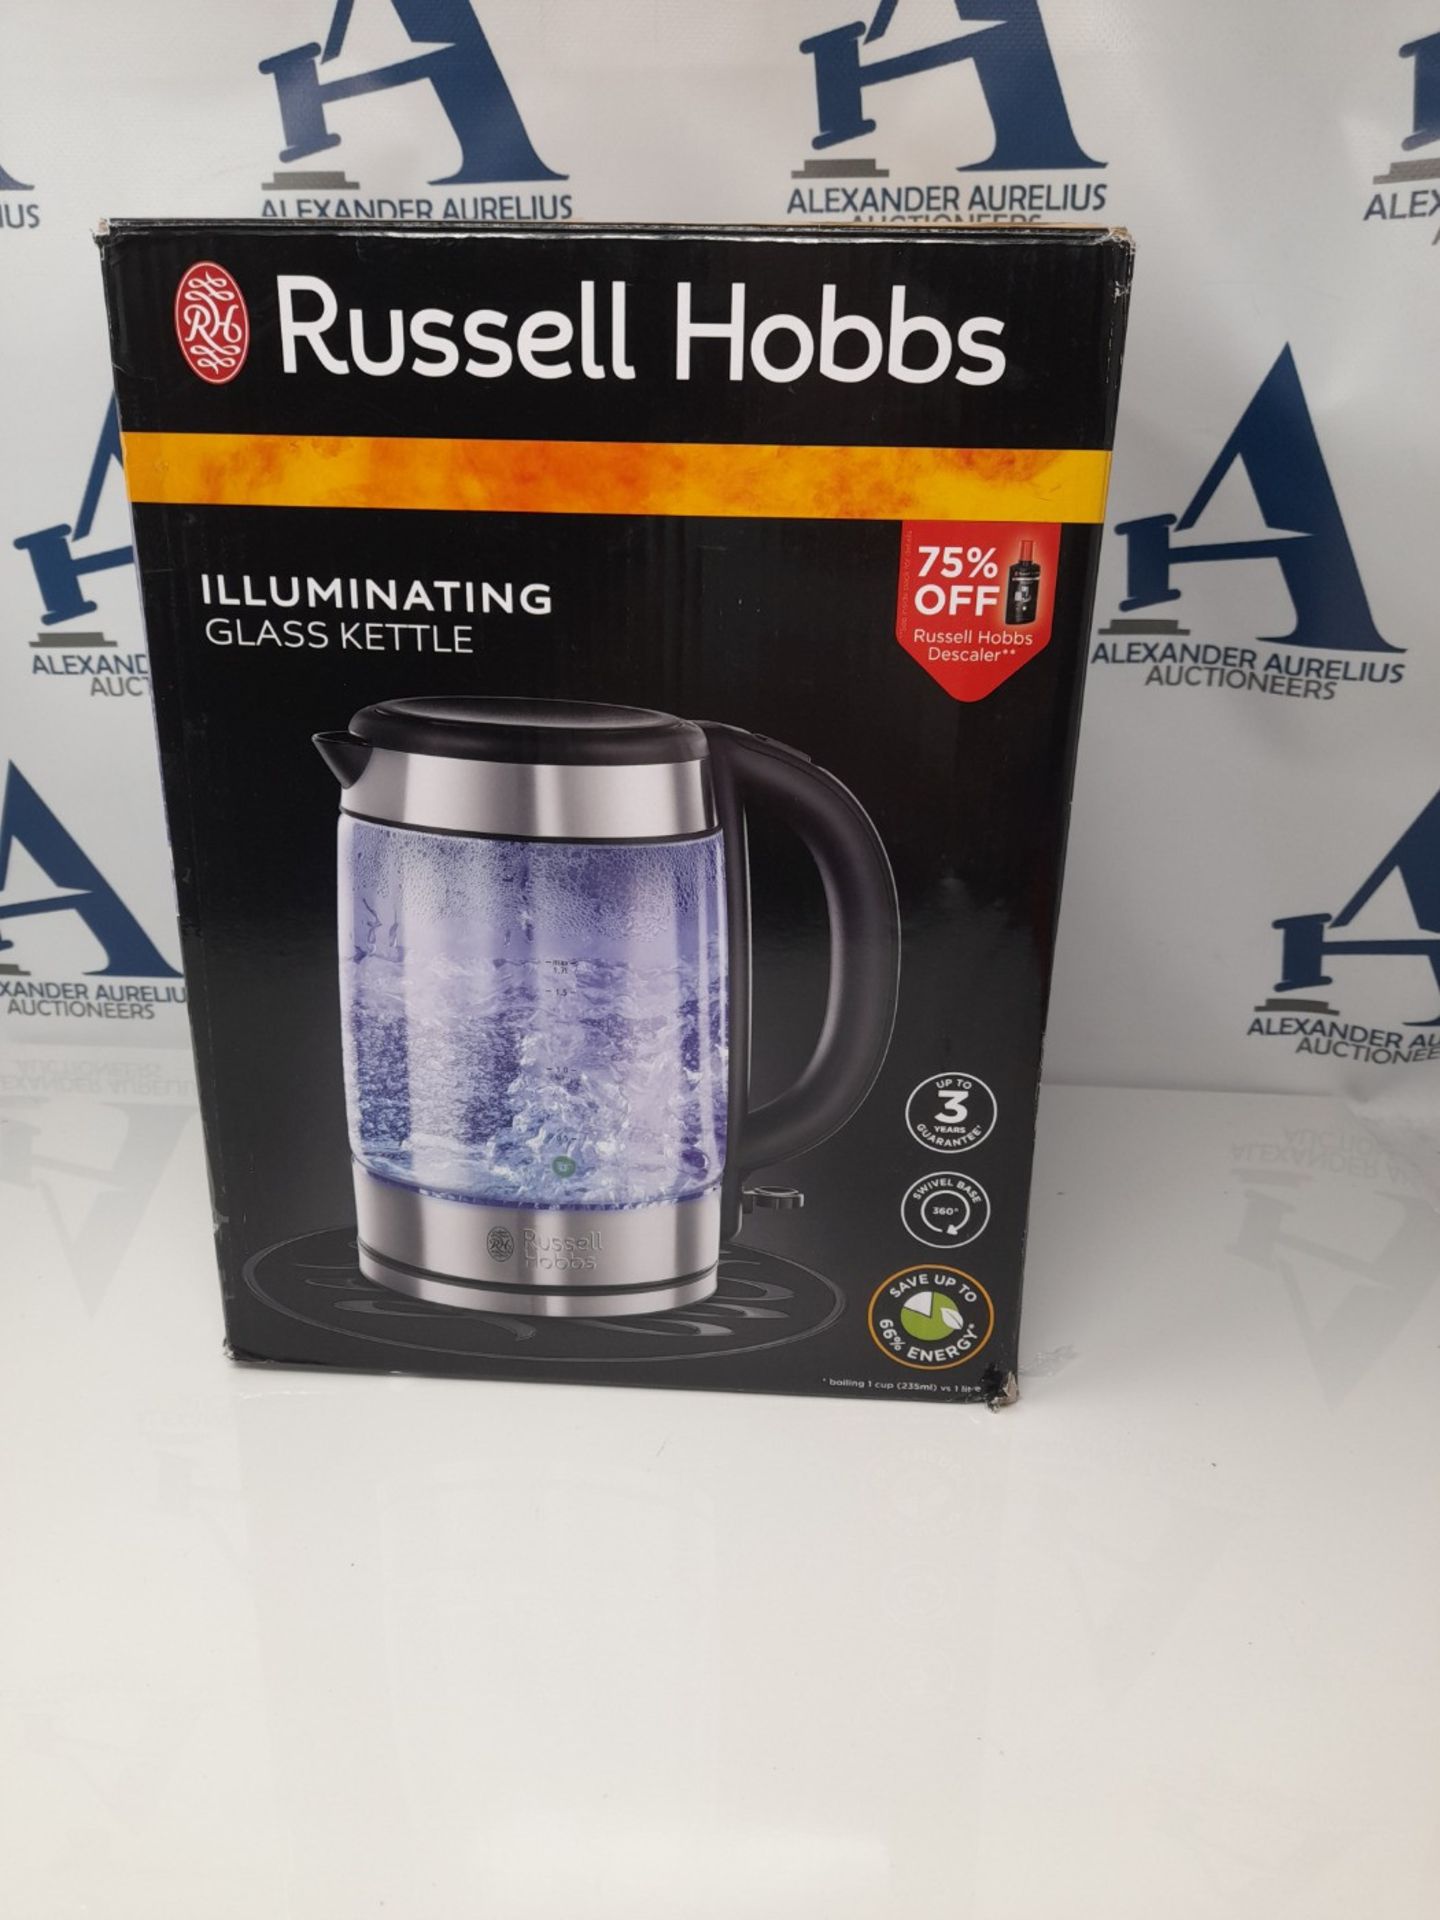 Russell Hobbs 21600-10 Illuminating Glass Kettle, Black, 1.7 Litre, 3000 Watt - Image 2 of 3